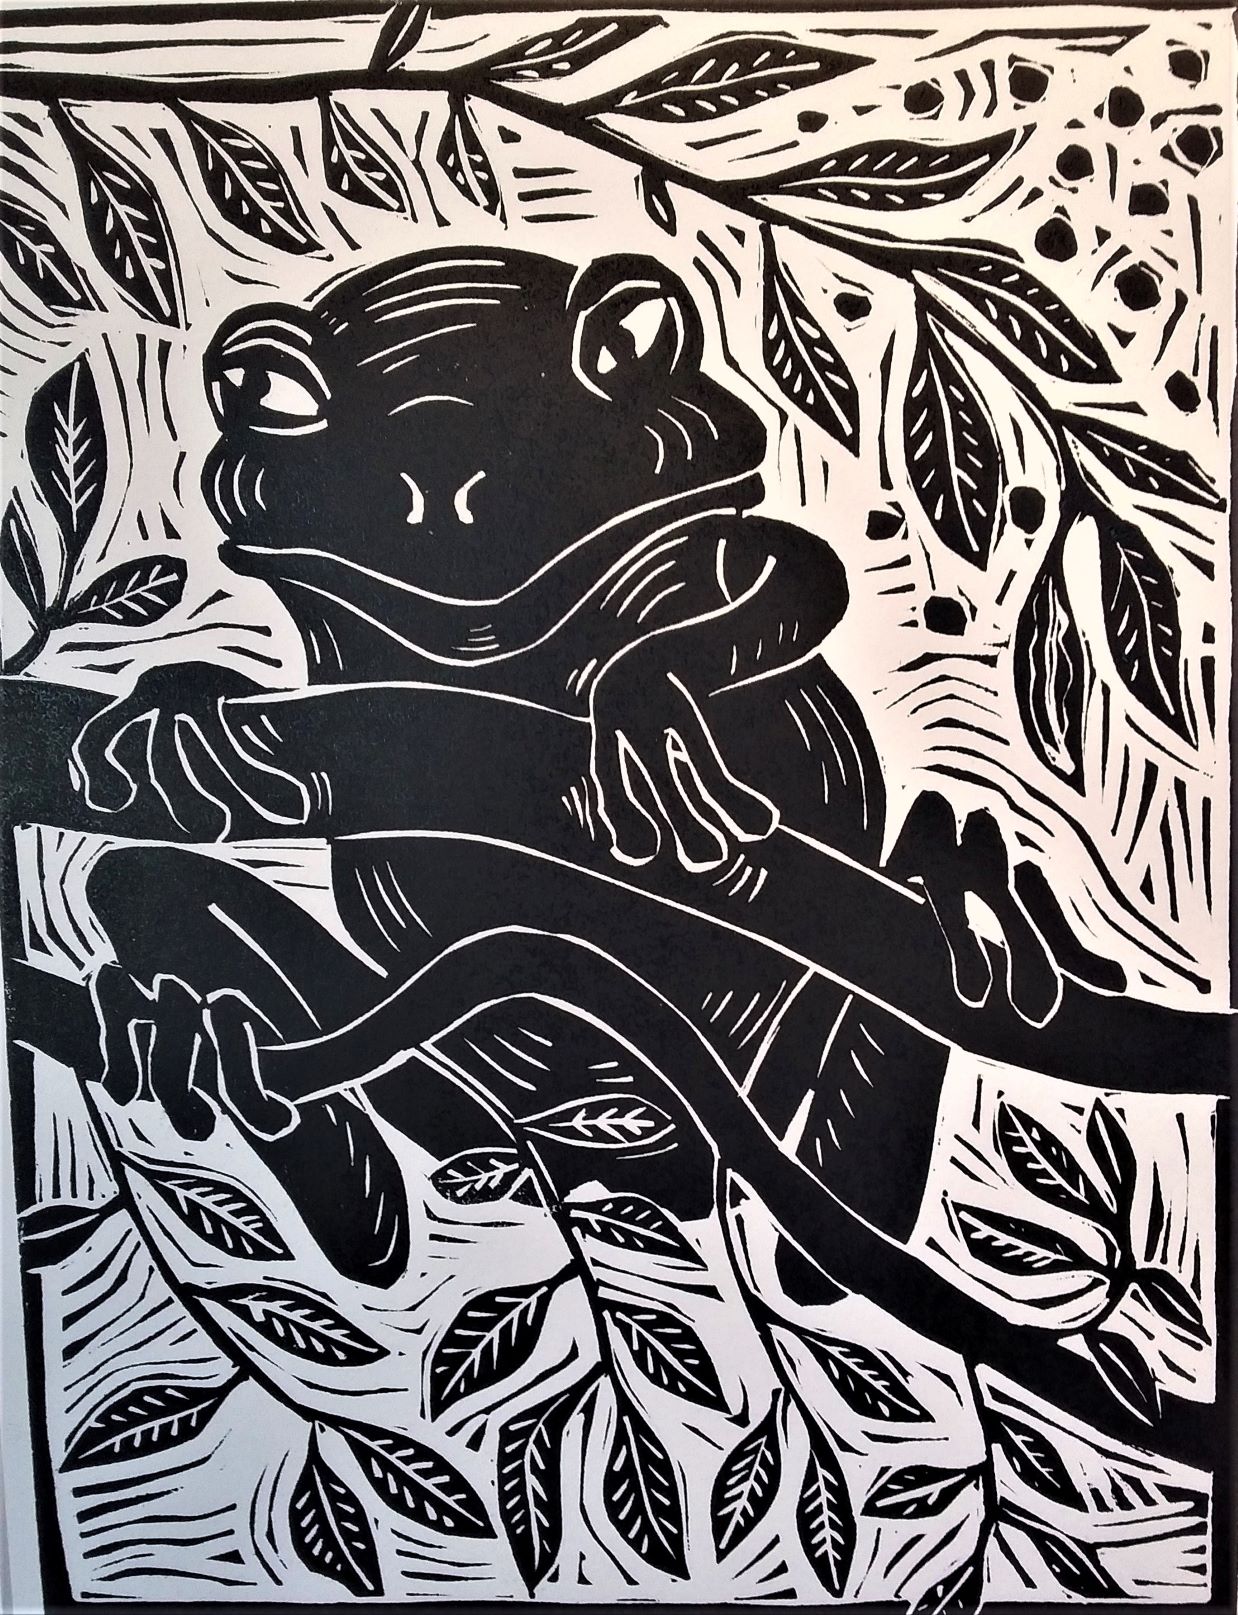 Tree frog_linoprint_Jim Woodbury.jpg